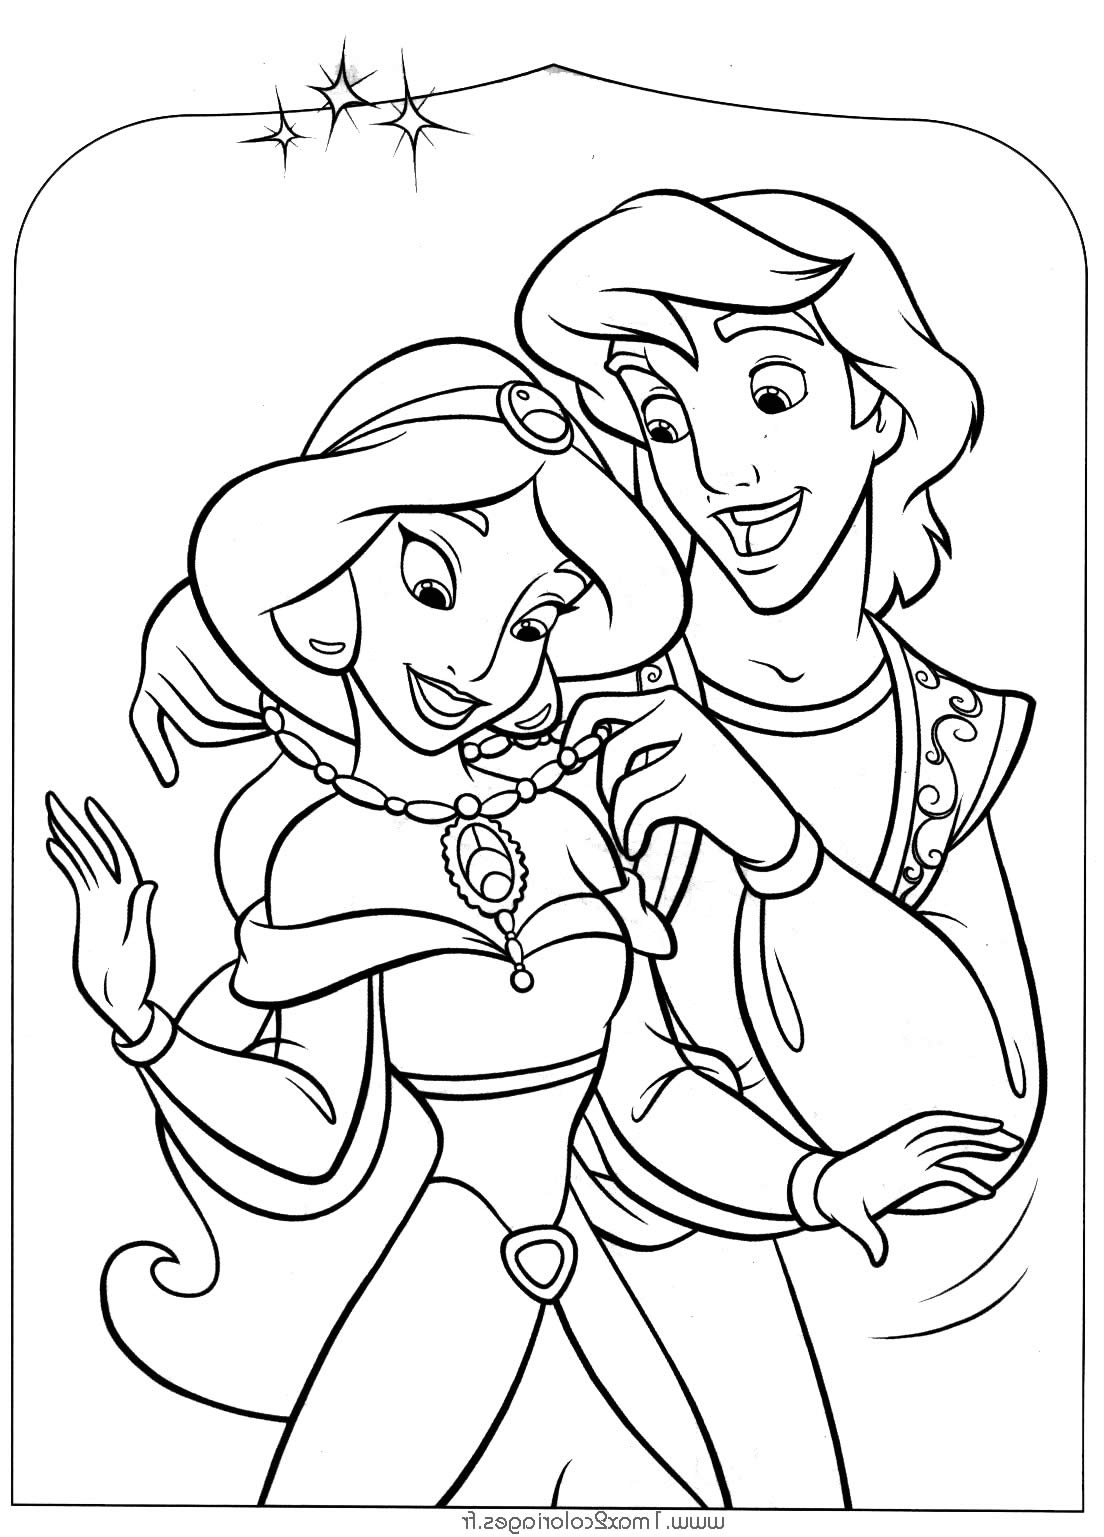 Coloriage Walt Disney Beau Images Desenhos Para Imprimir Colorir E Pintar Princesas Disney